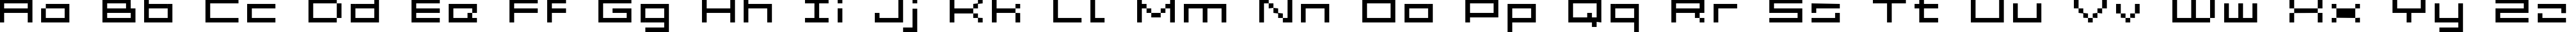 Пример написания английского алфавита шрифтом Grixel Acme 5 Wide Xtnd